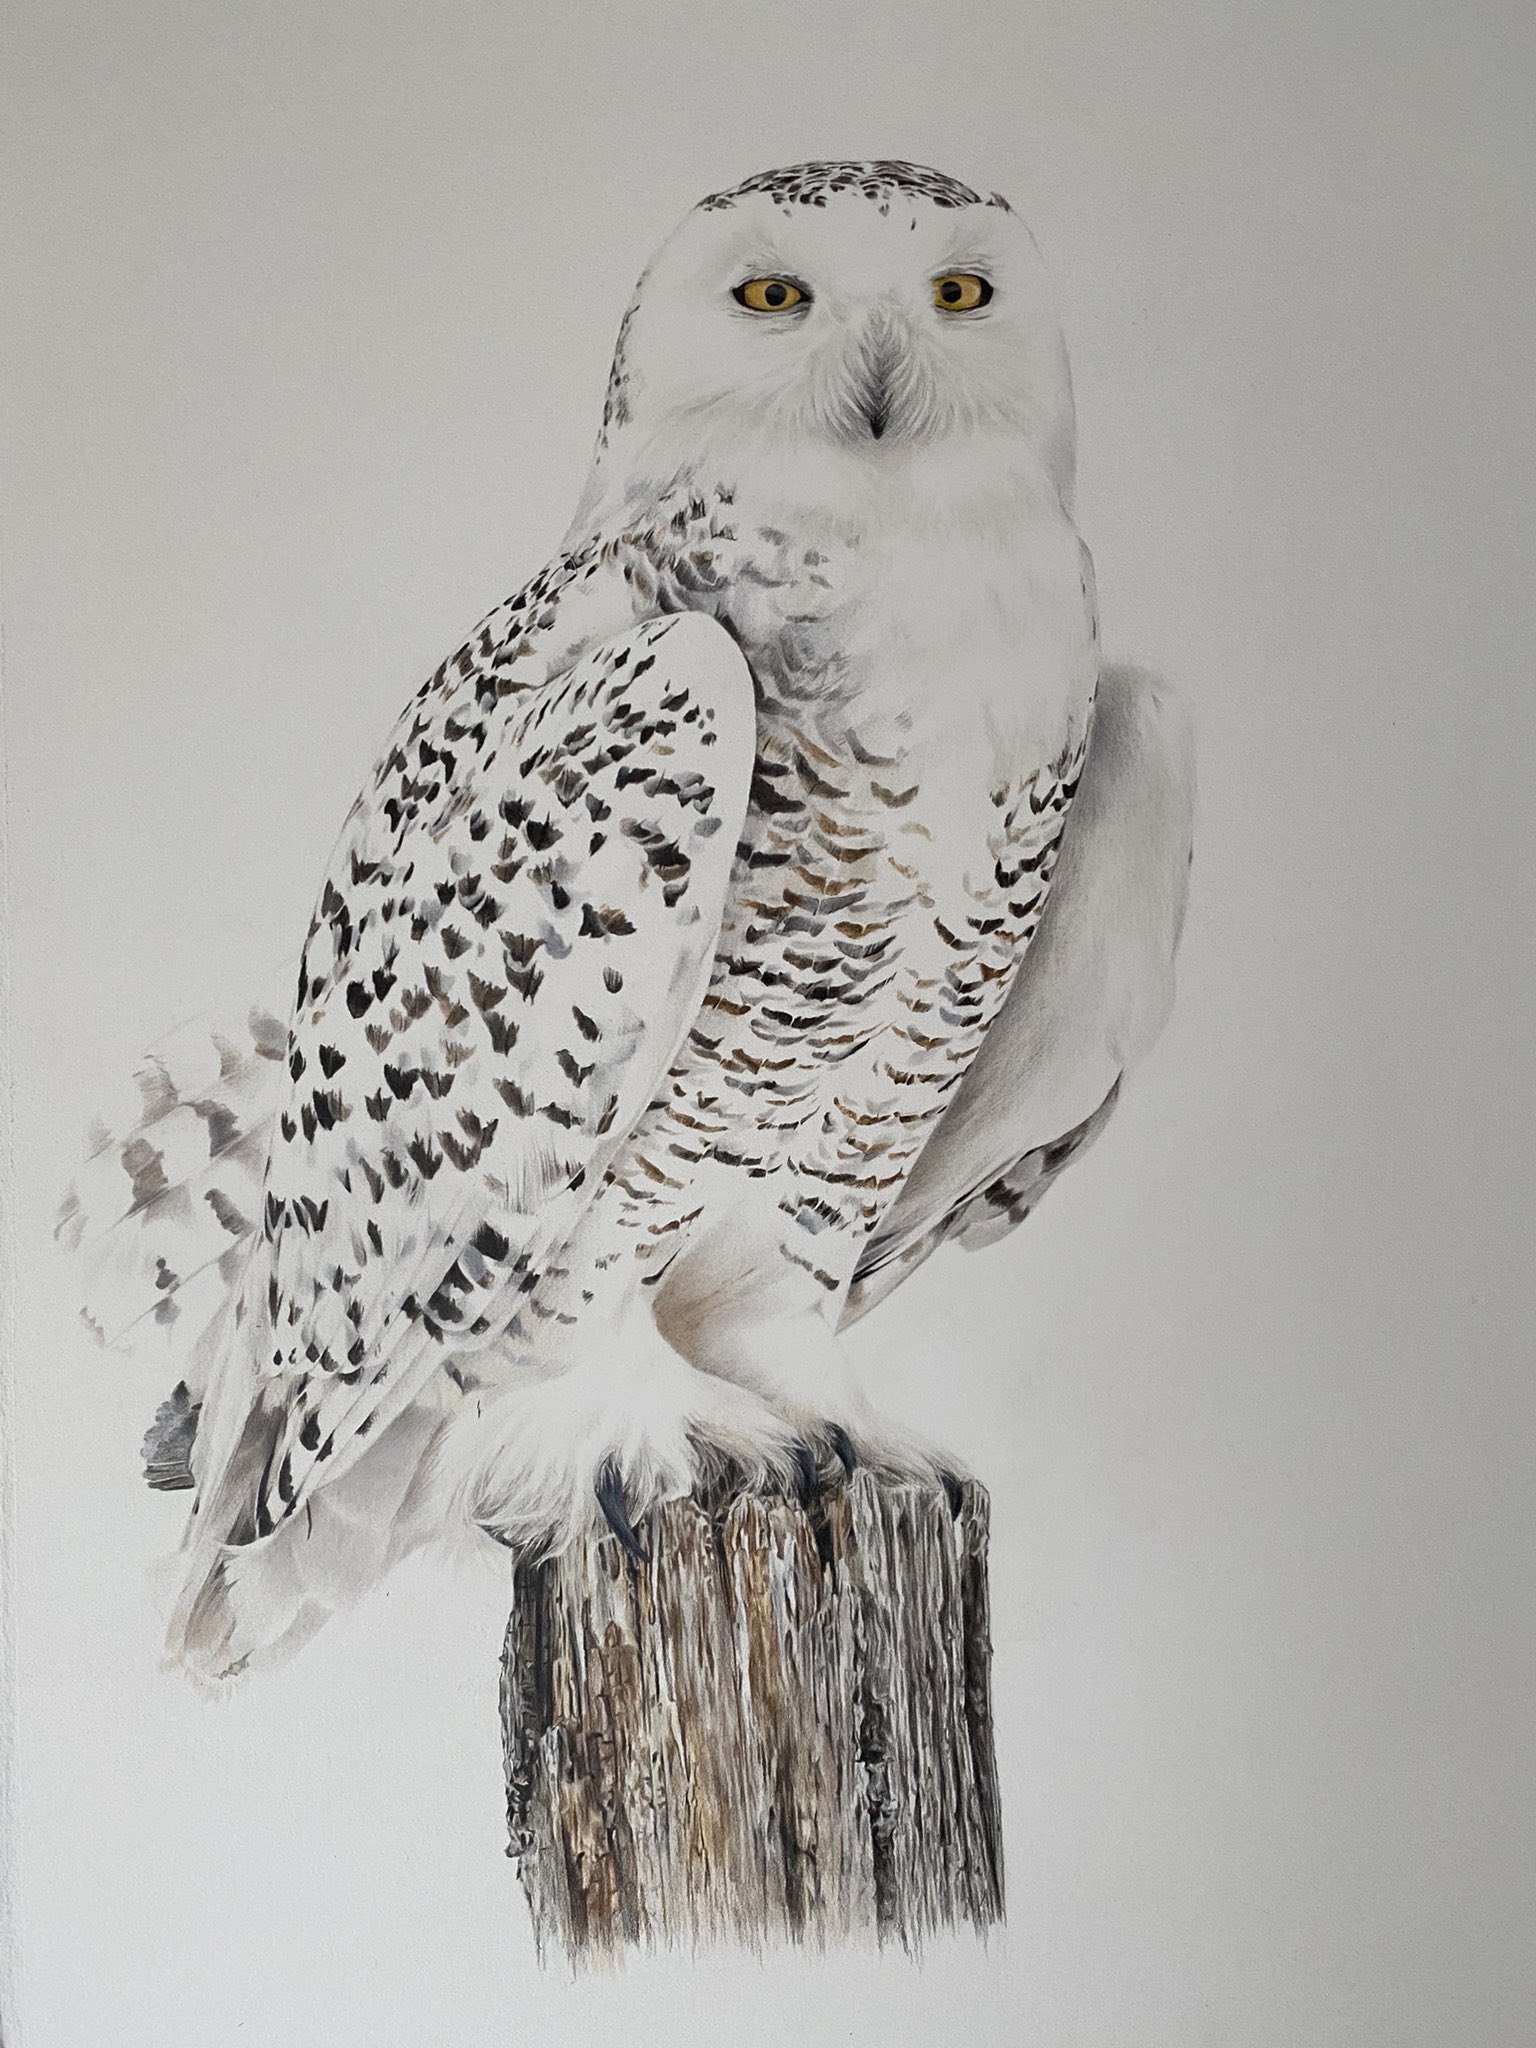 Birdorable Snowy Owl Photo Notebook (6.5